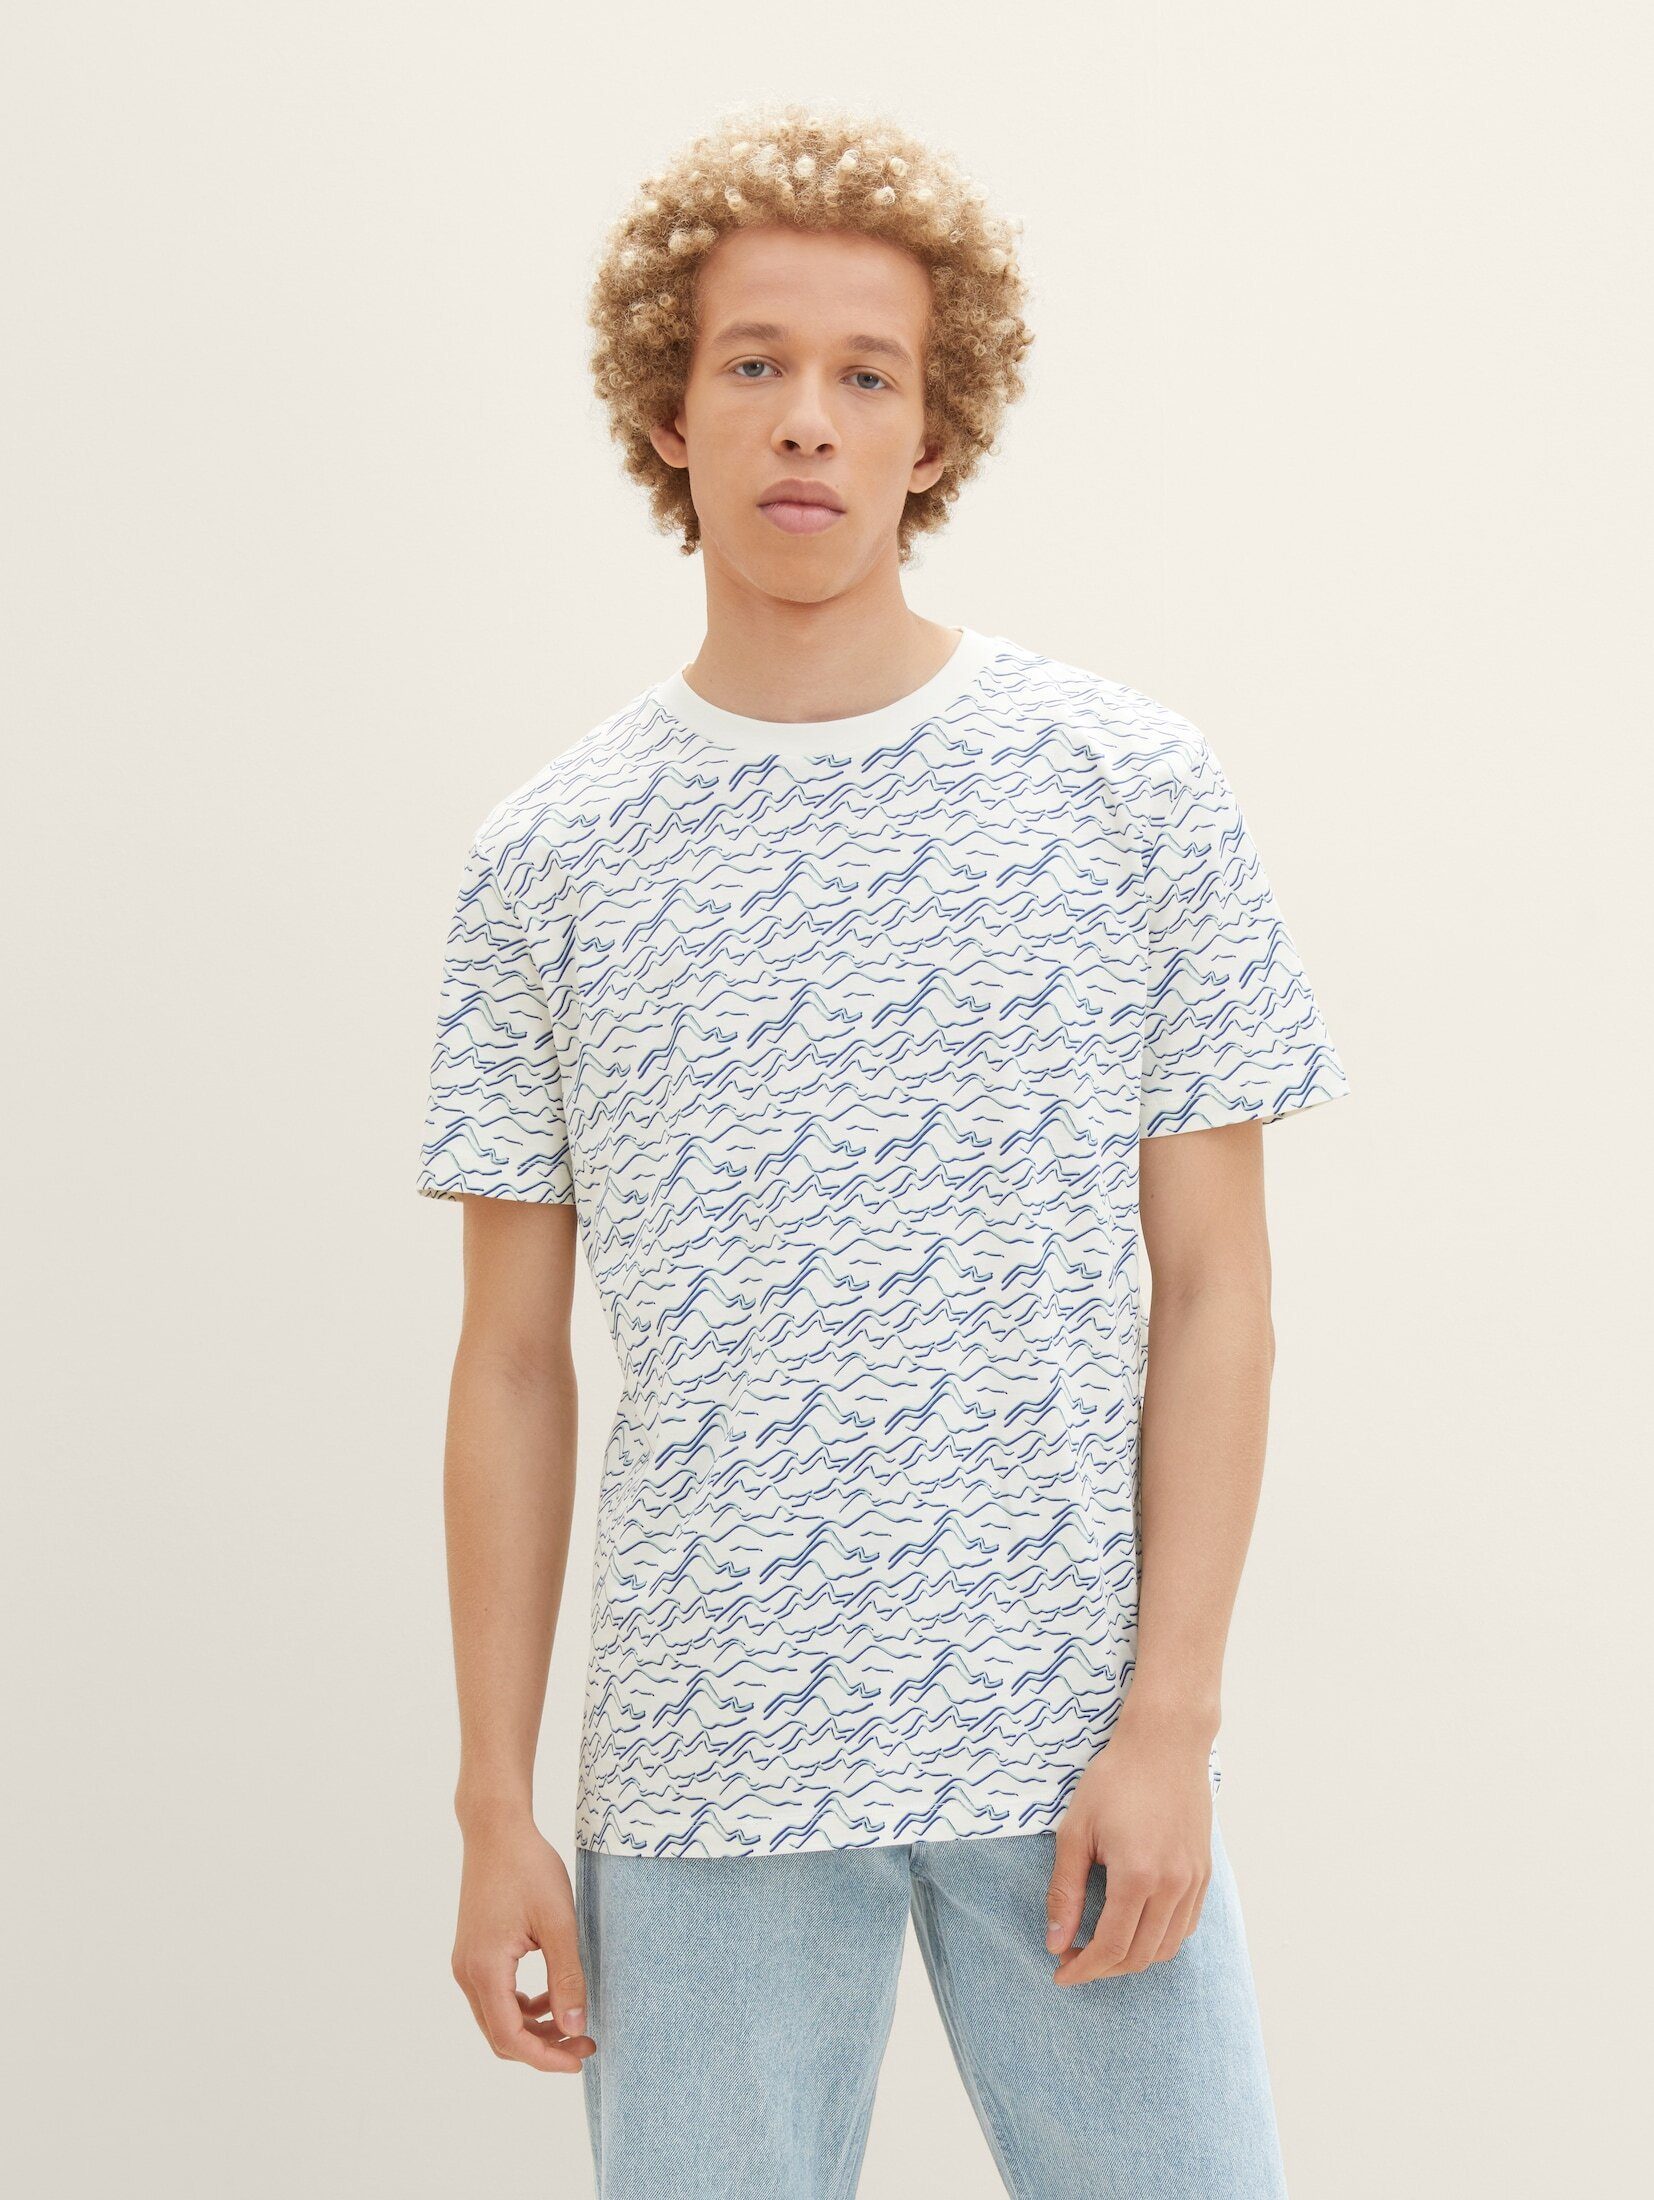 T-Shirt white mit print T-Shirt Allover-Print TAILOR TOM abstract Denim mountain